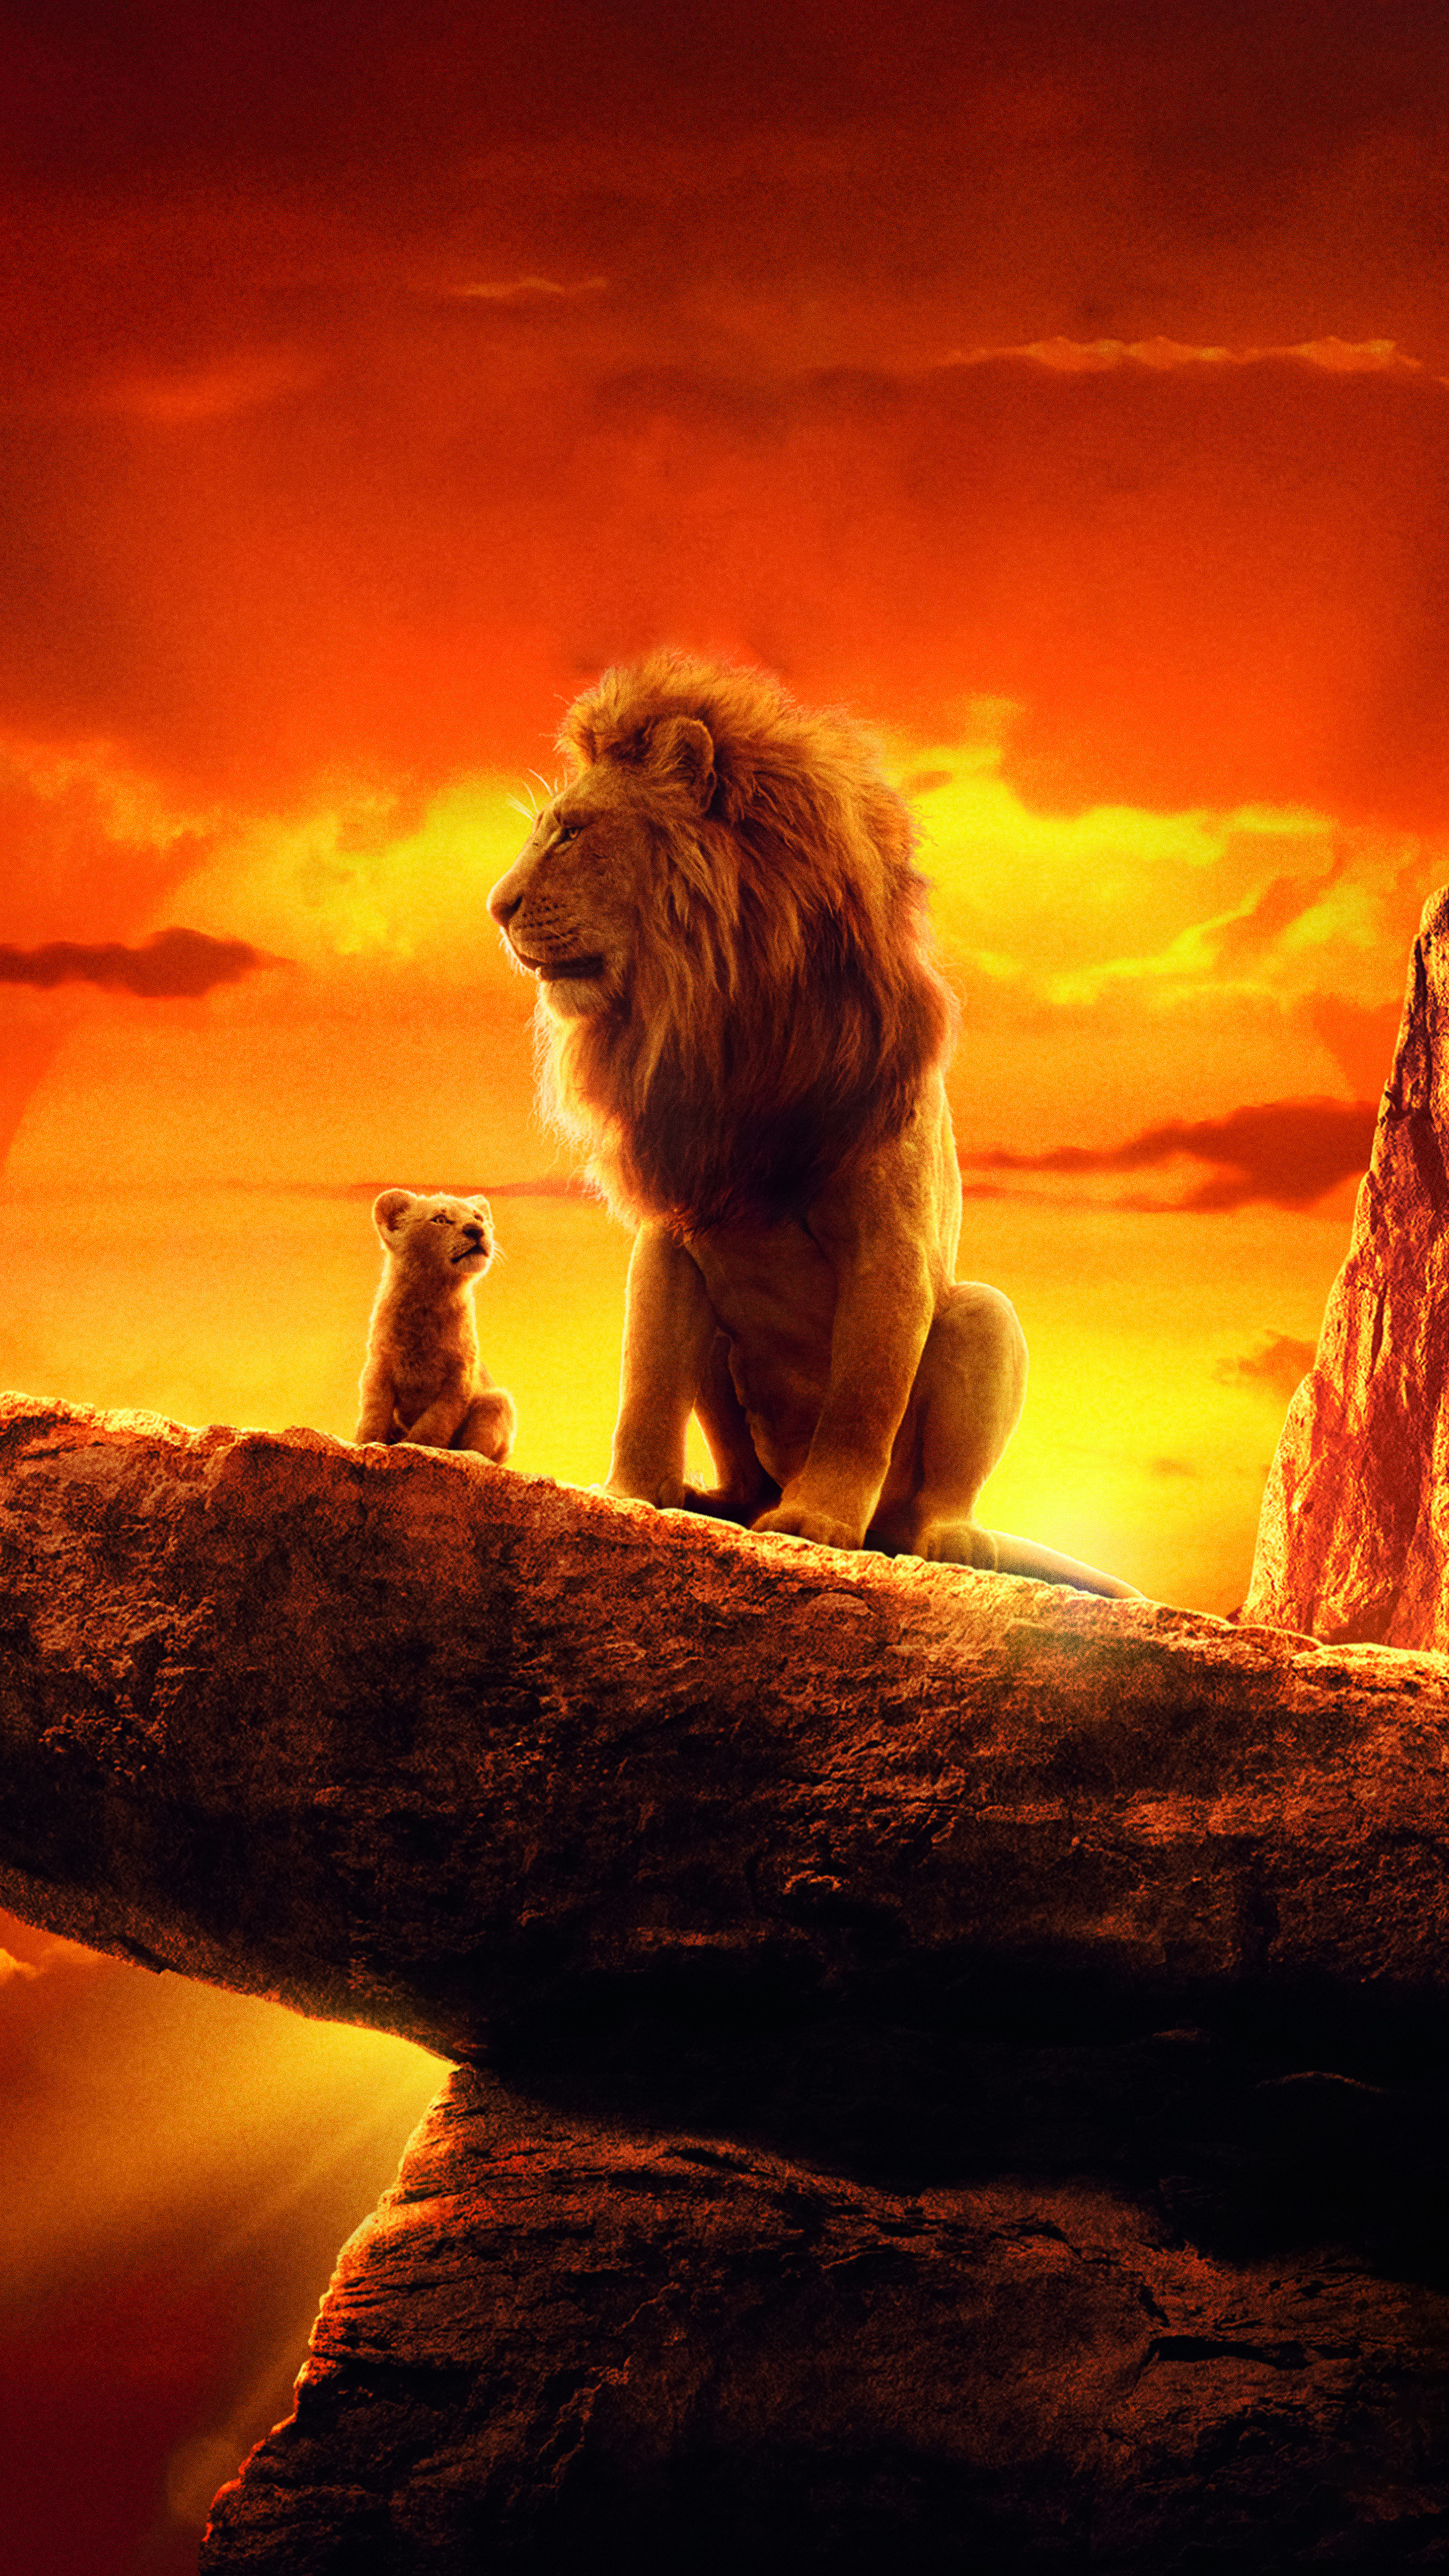 The Lion King, Stunning 4K movie, Sony Xperia X, Commanding visuals, 2160x3840 4K Handy